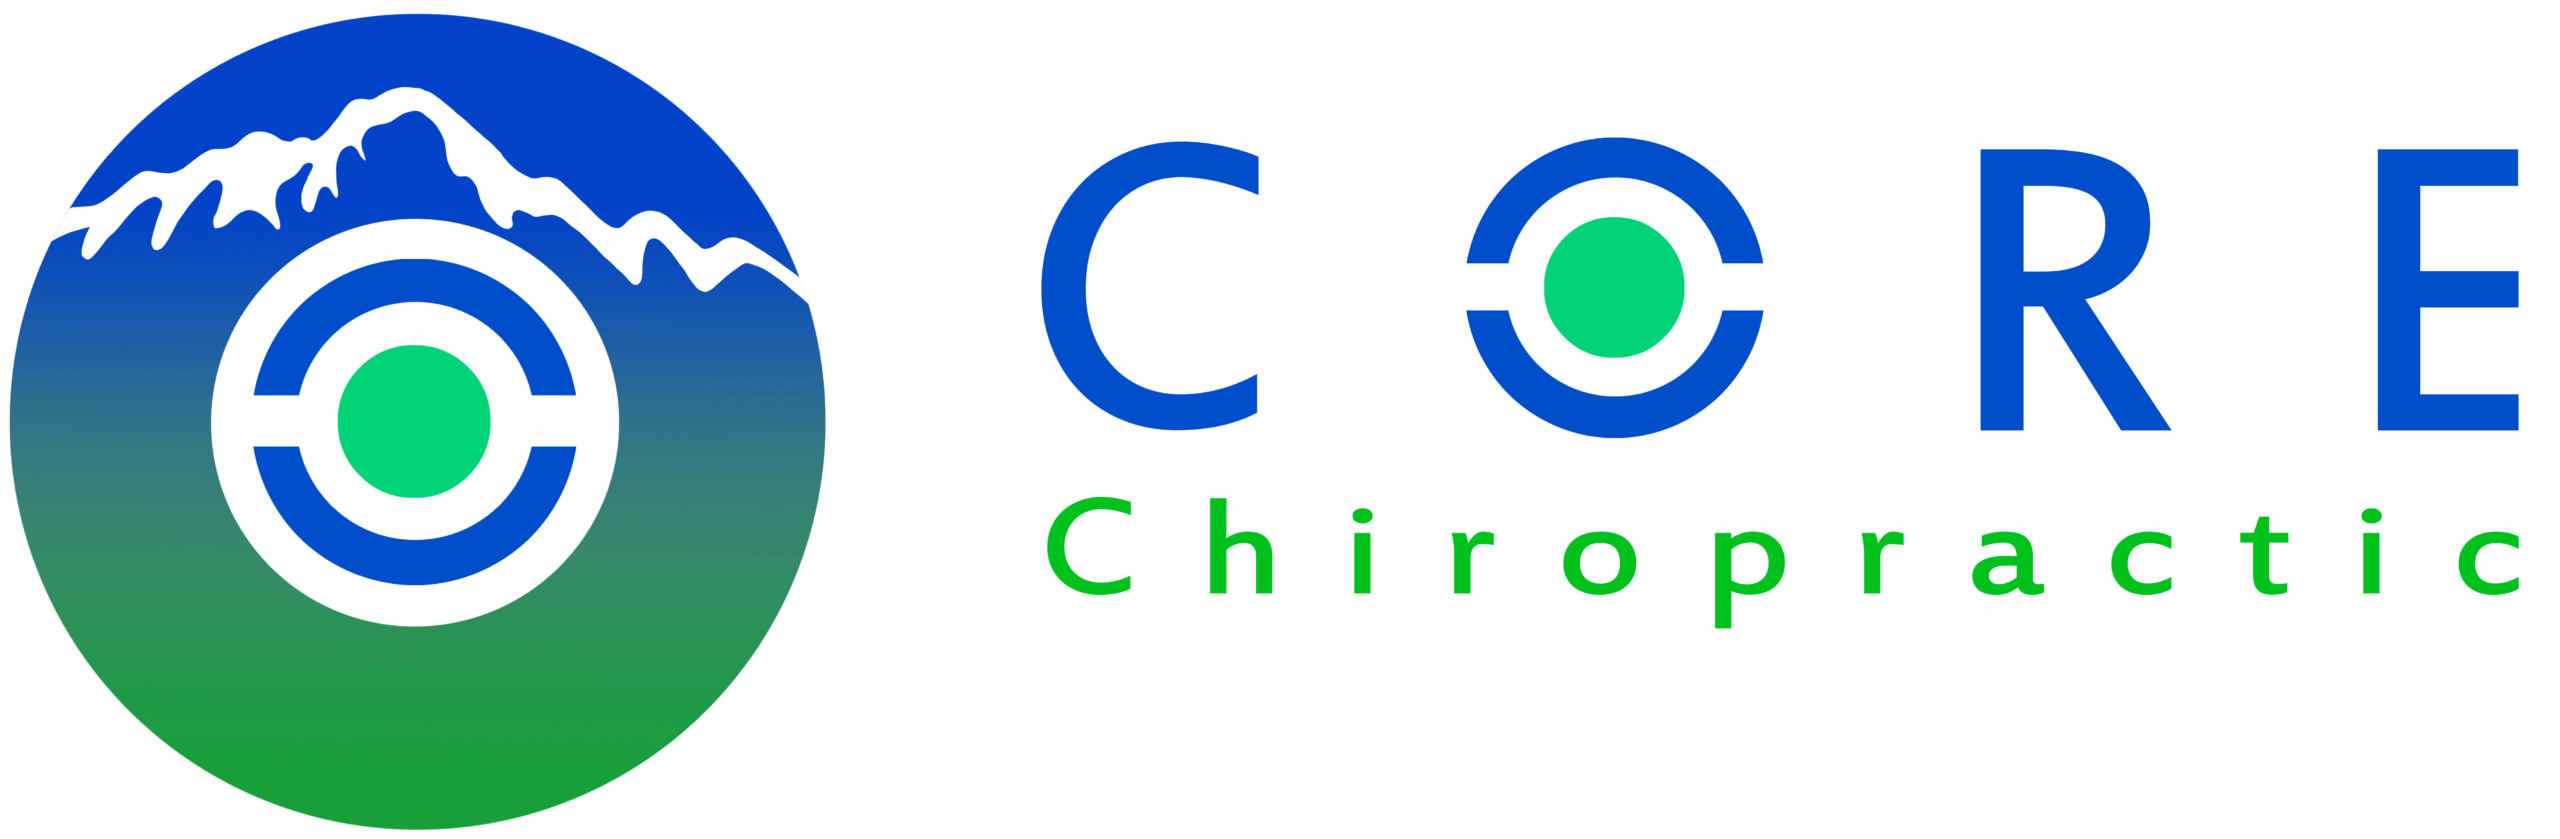 Core Chiropractic logo